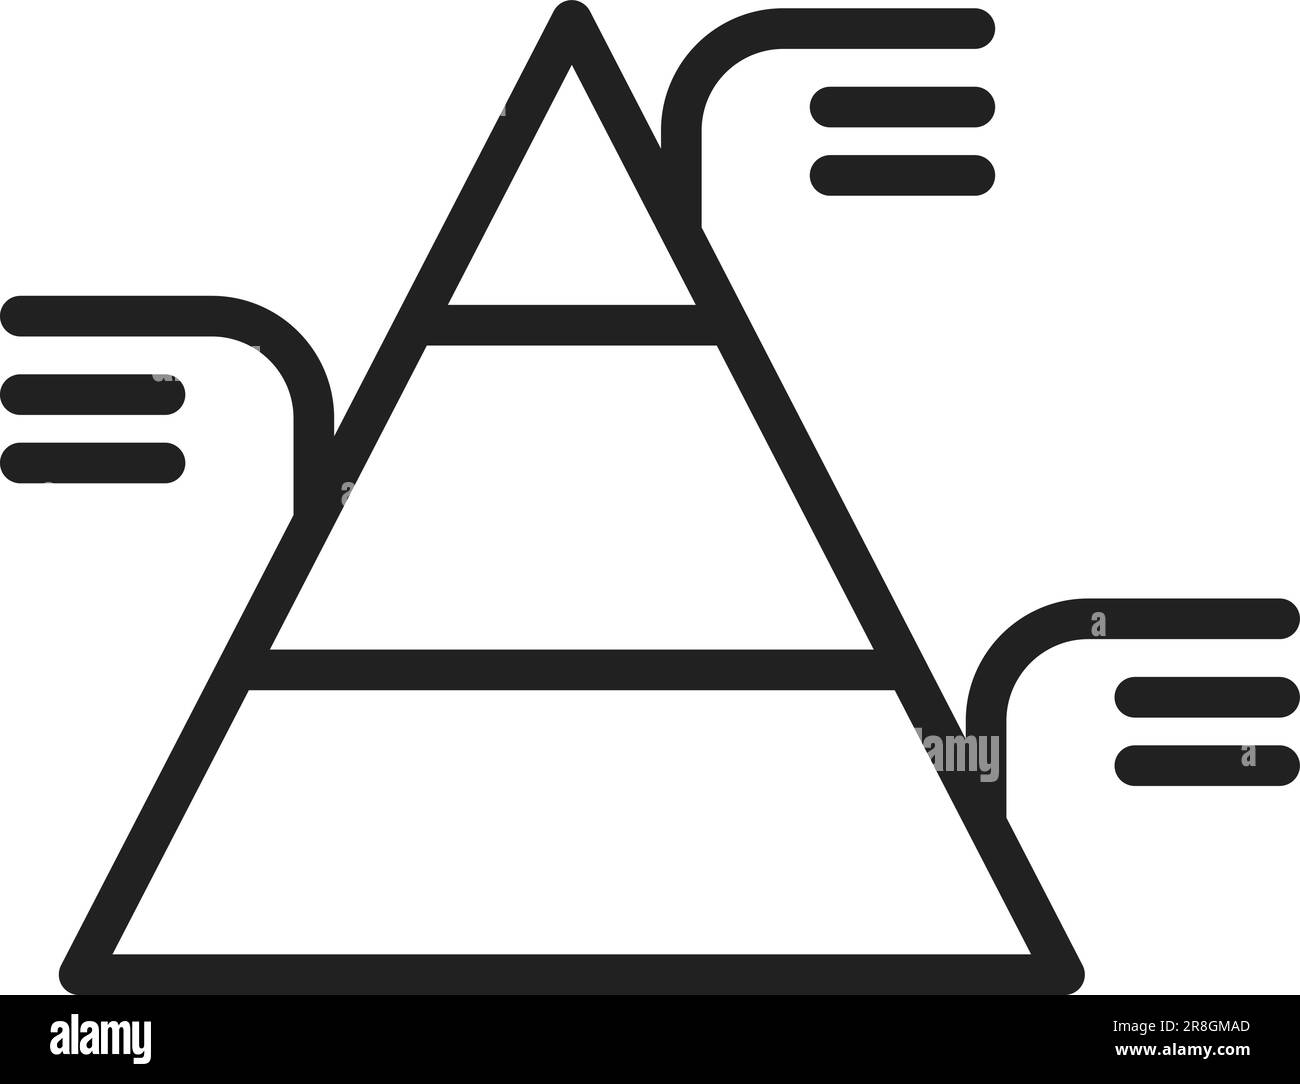 Pyramid Chart Icon Image. Stock Vector